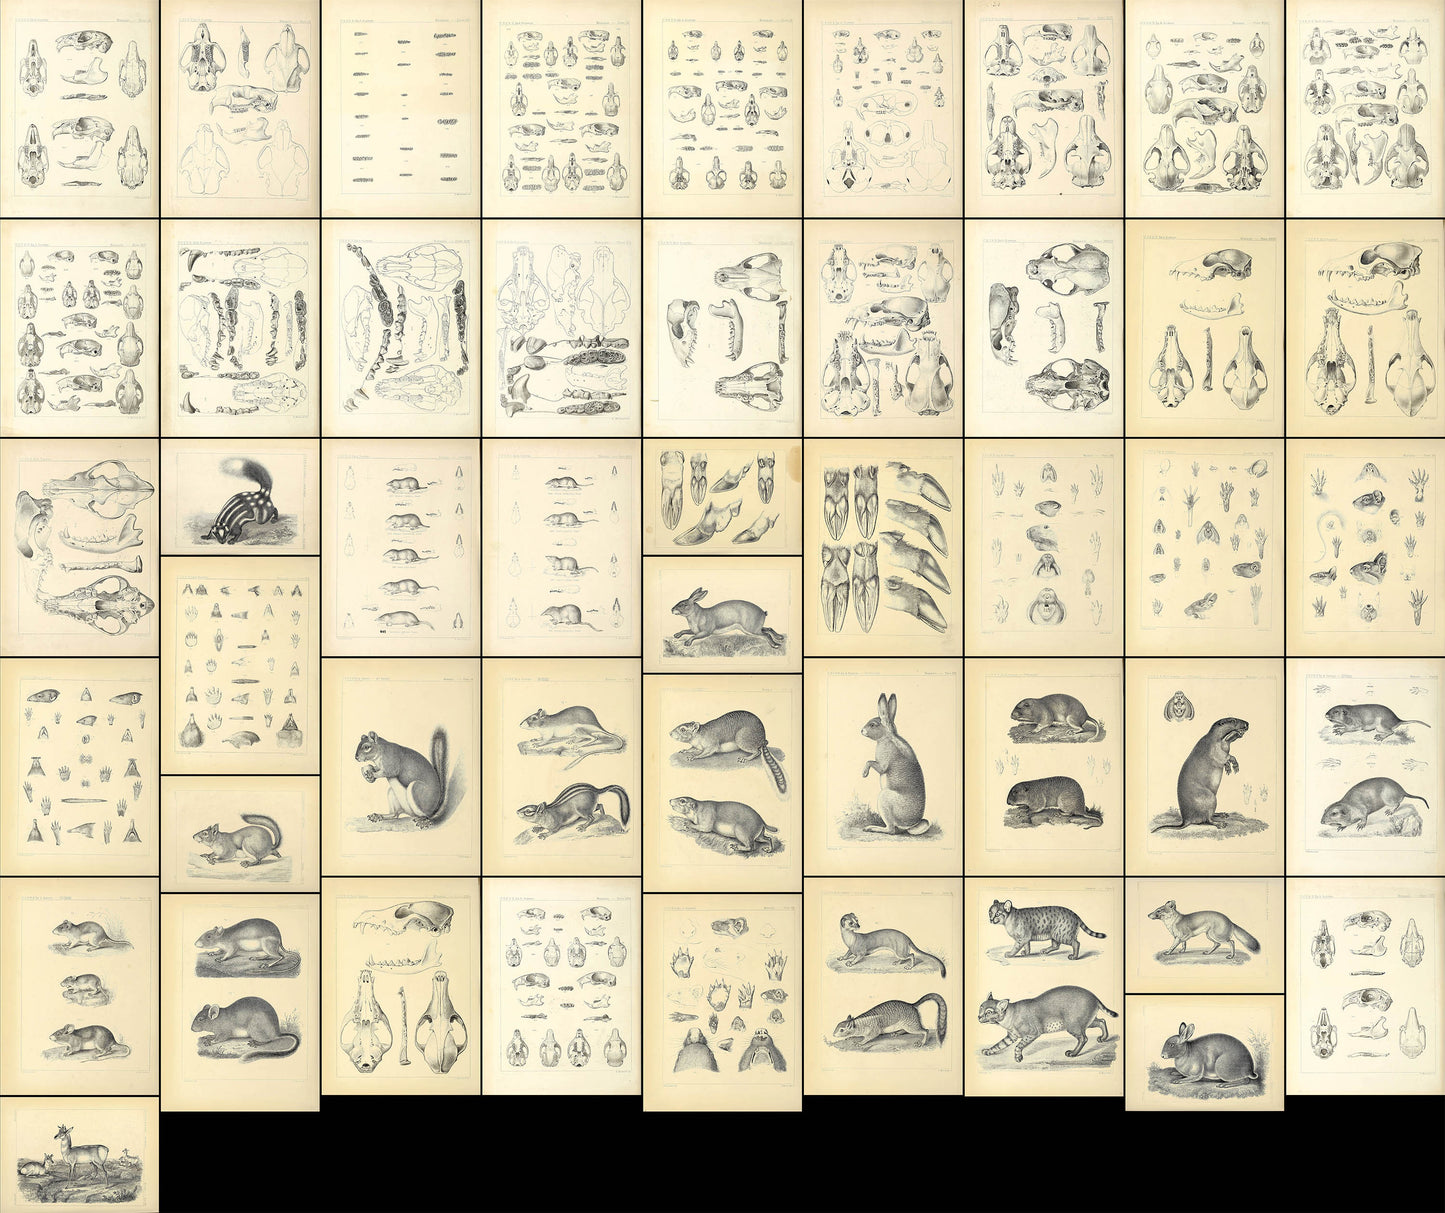 Catalogue of North American Mammals Set 2 [49 Images]